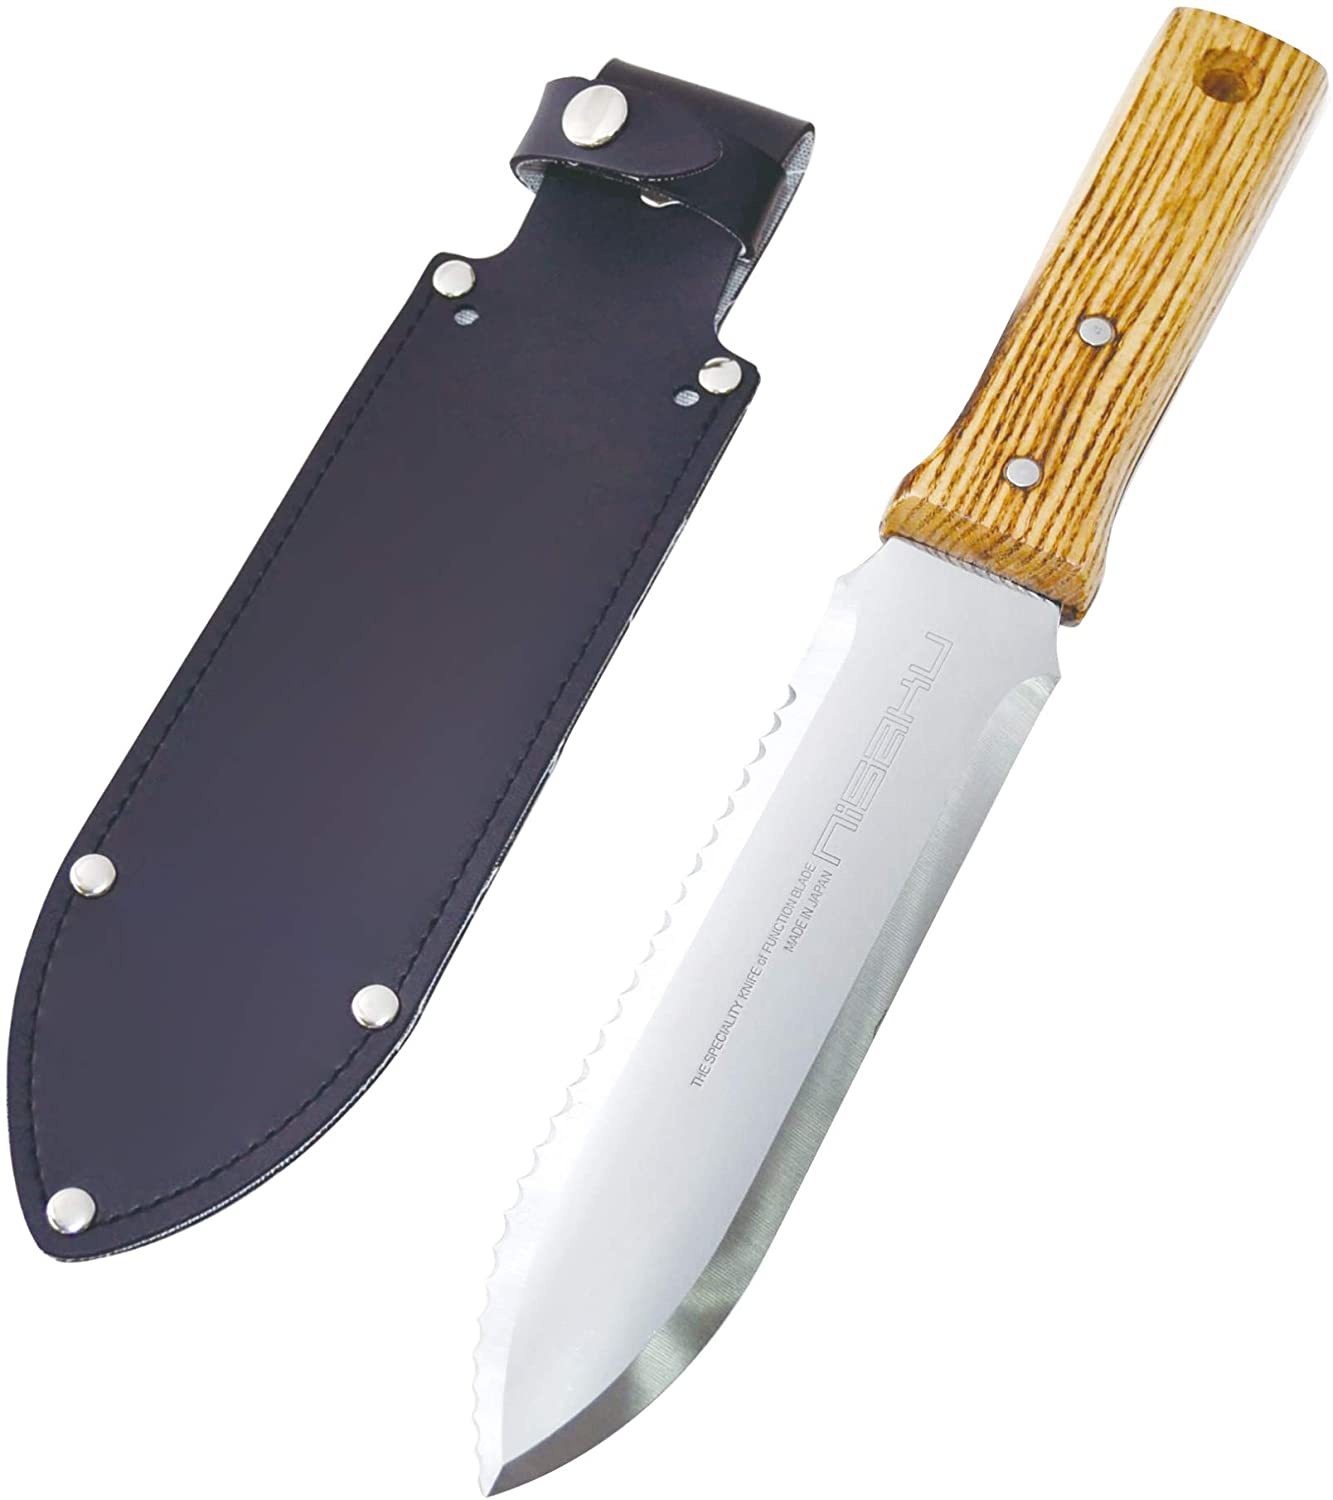 types of Garden knives: Hori-Hori Weeding & Digging Knife, Authentic Tomita